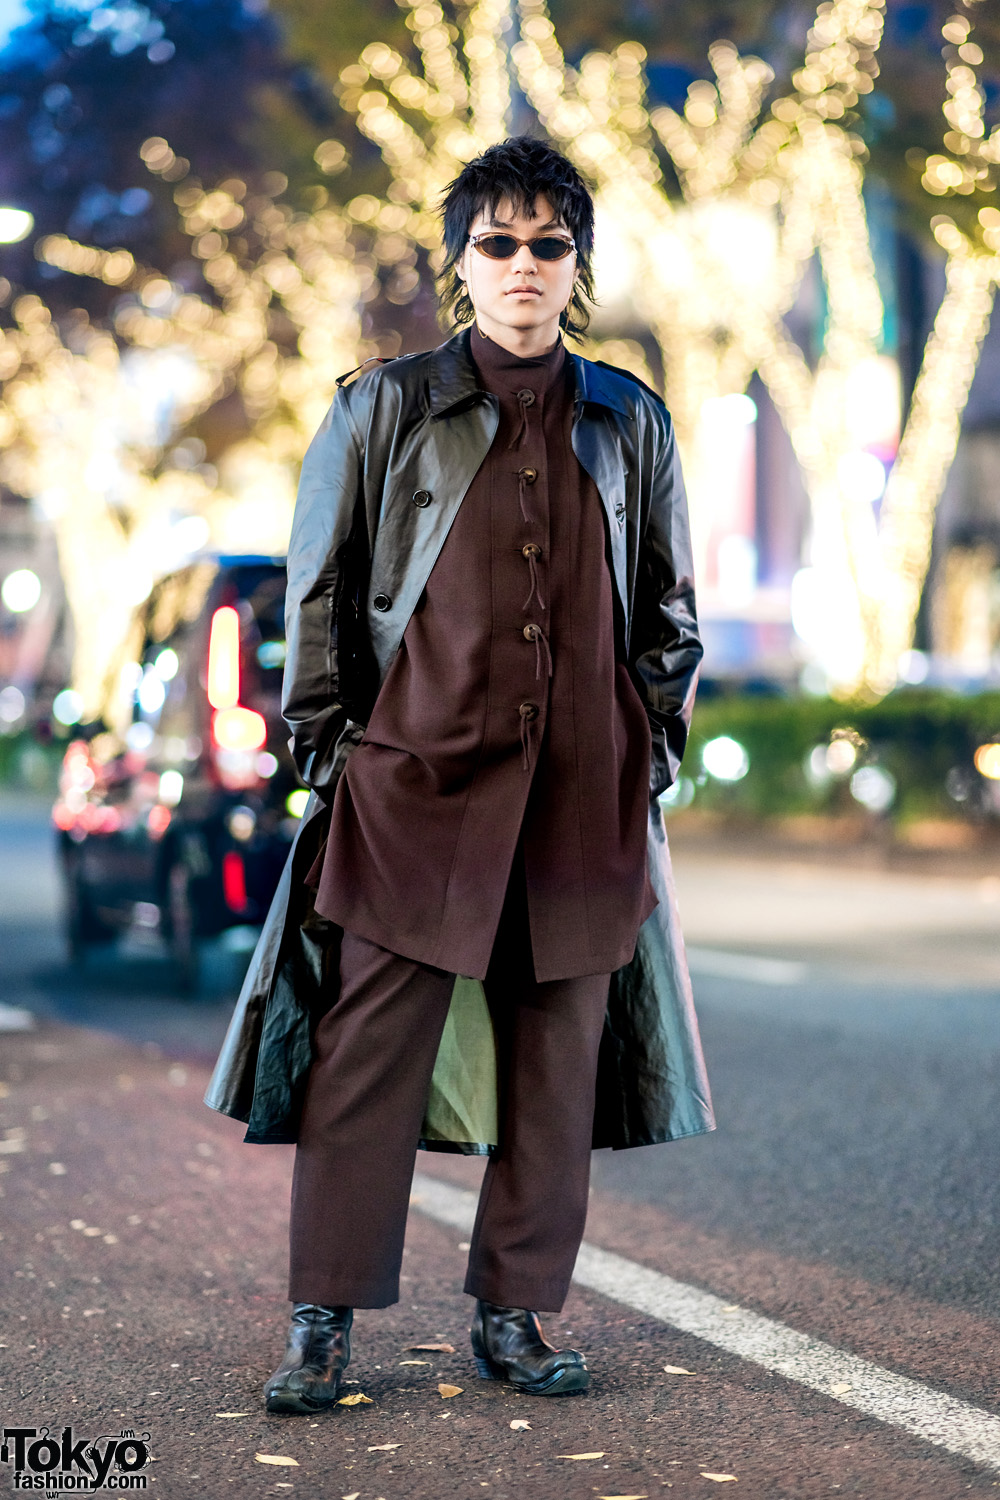 Tokyo Streetwear Style w/ Black Leather Coat & Brown Suit